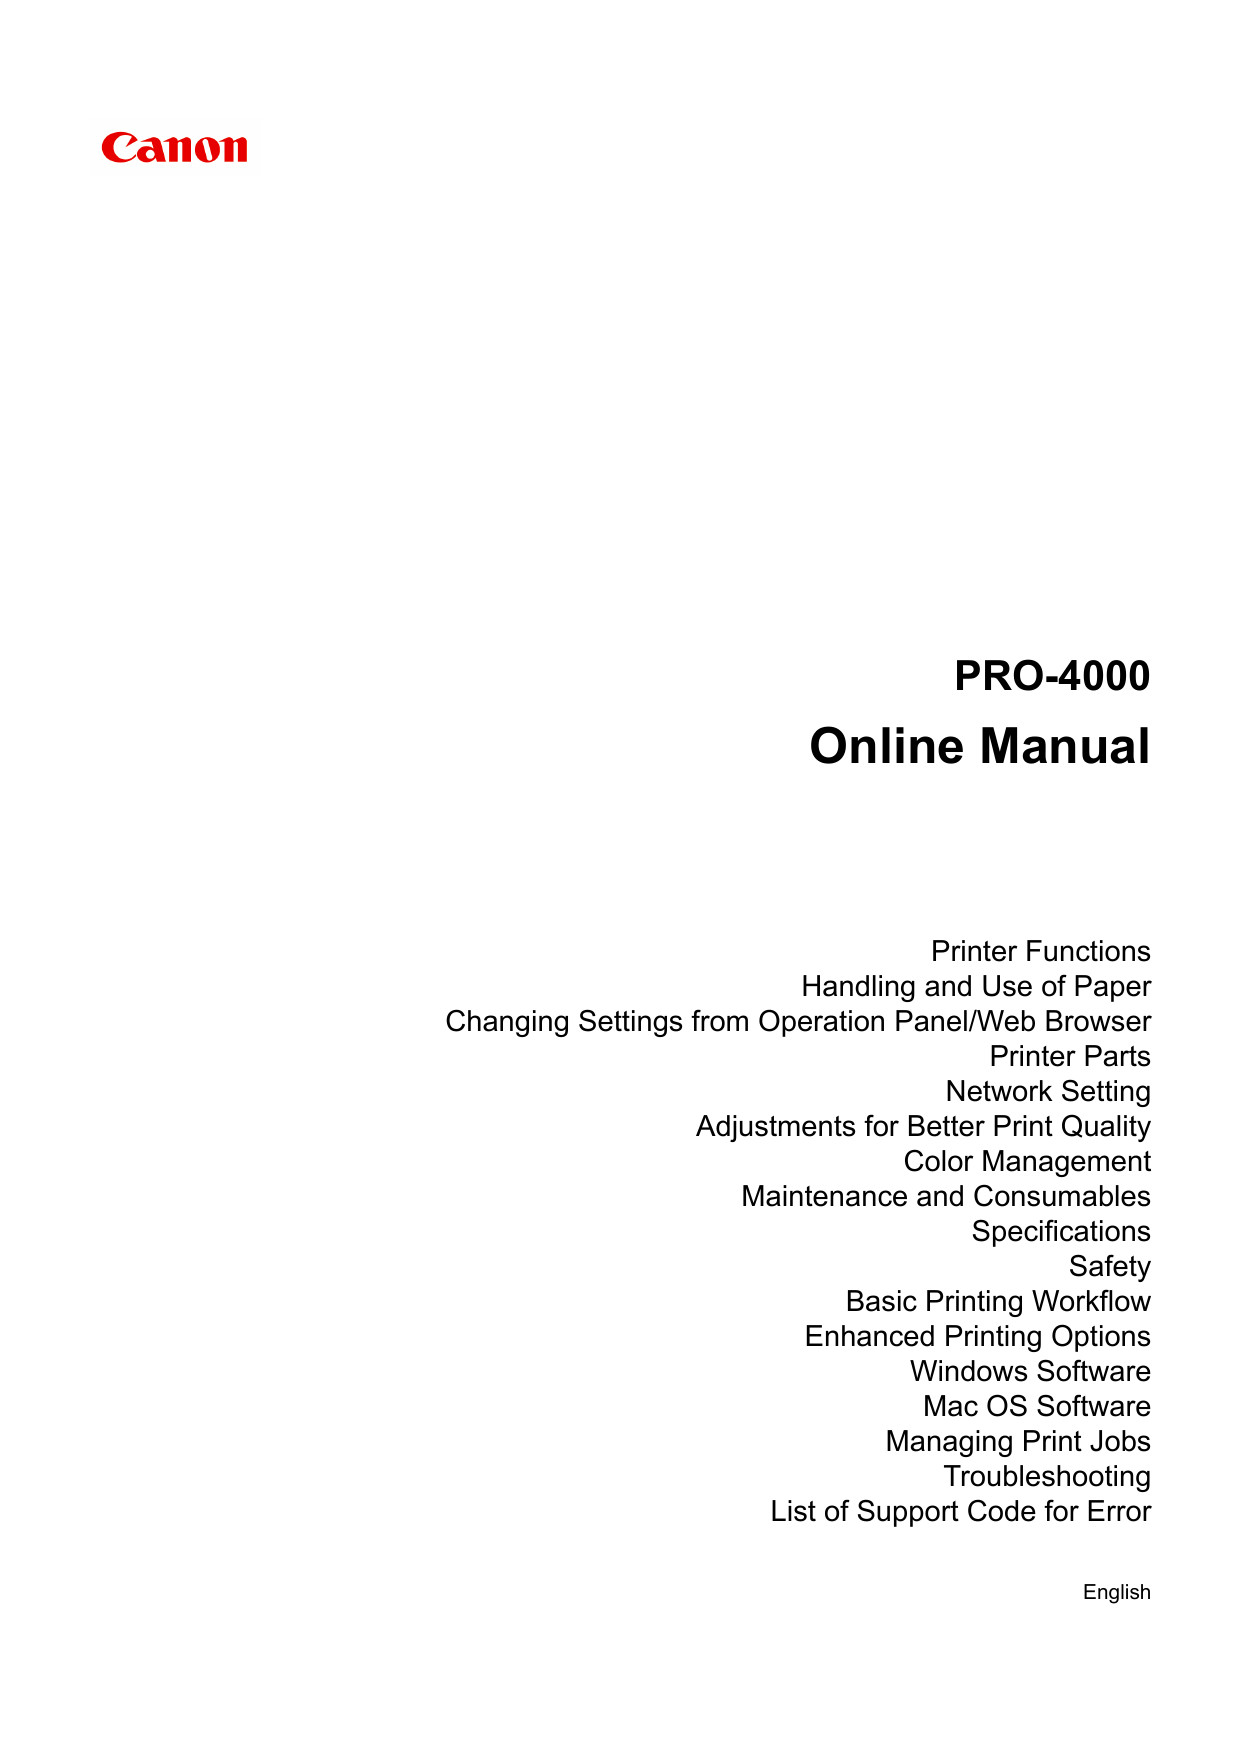 PRO 4000 line Manual